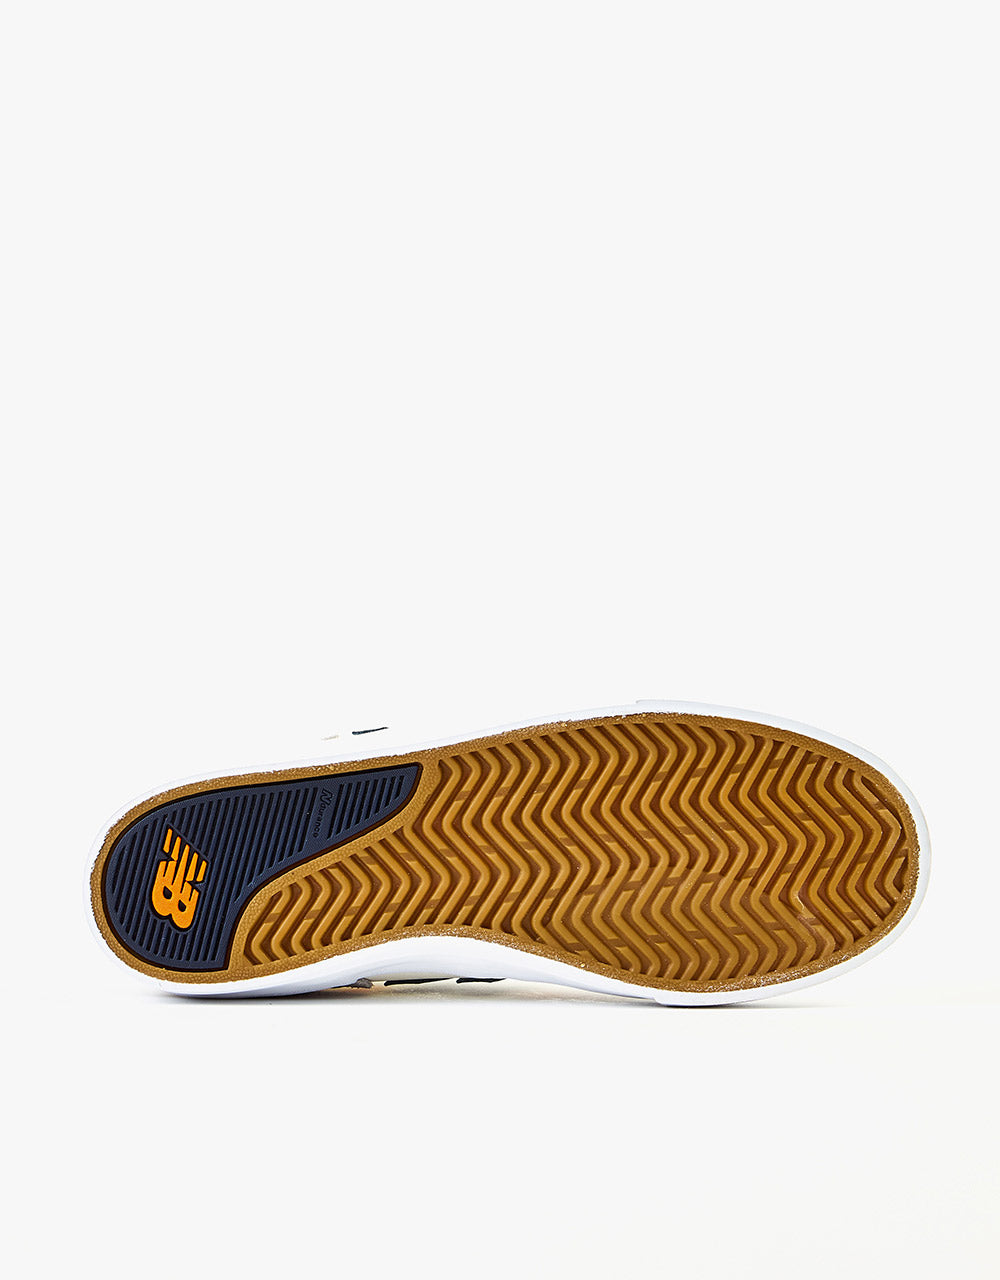 New Balance Numeric 306 Skate Shoes - Cream/Orange